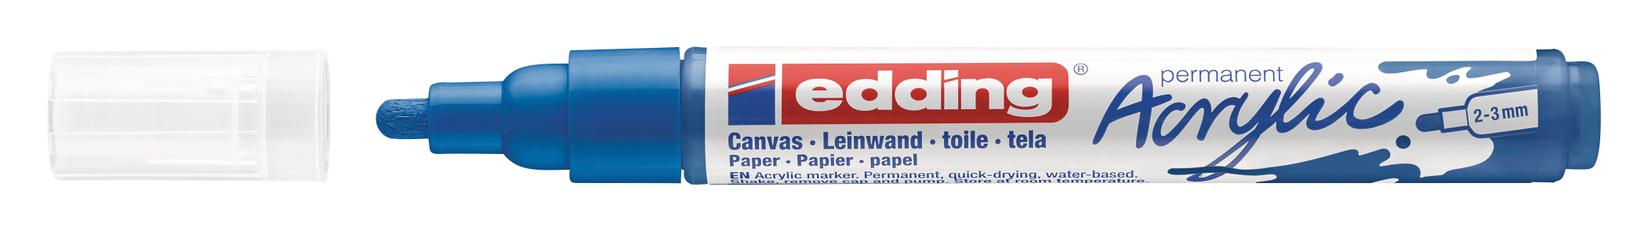 EDDING Akrilni marker medium 2-3mm obli vrh E-5100 plavi